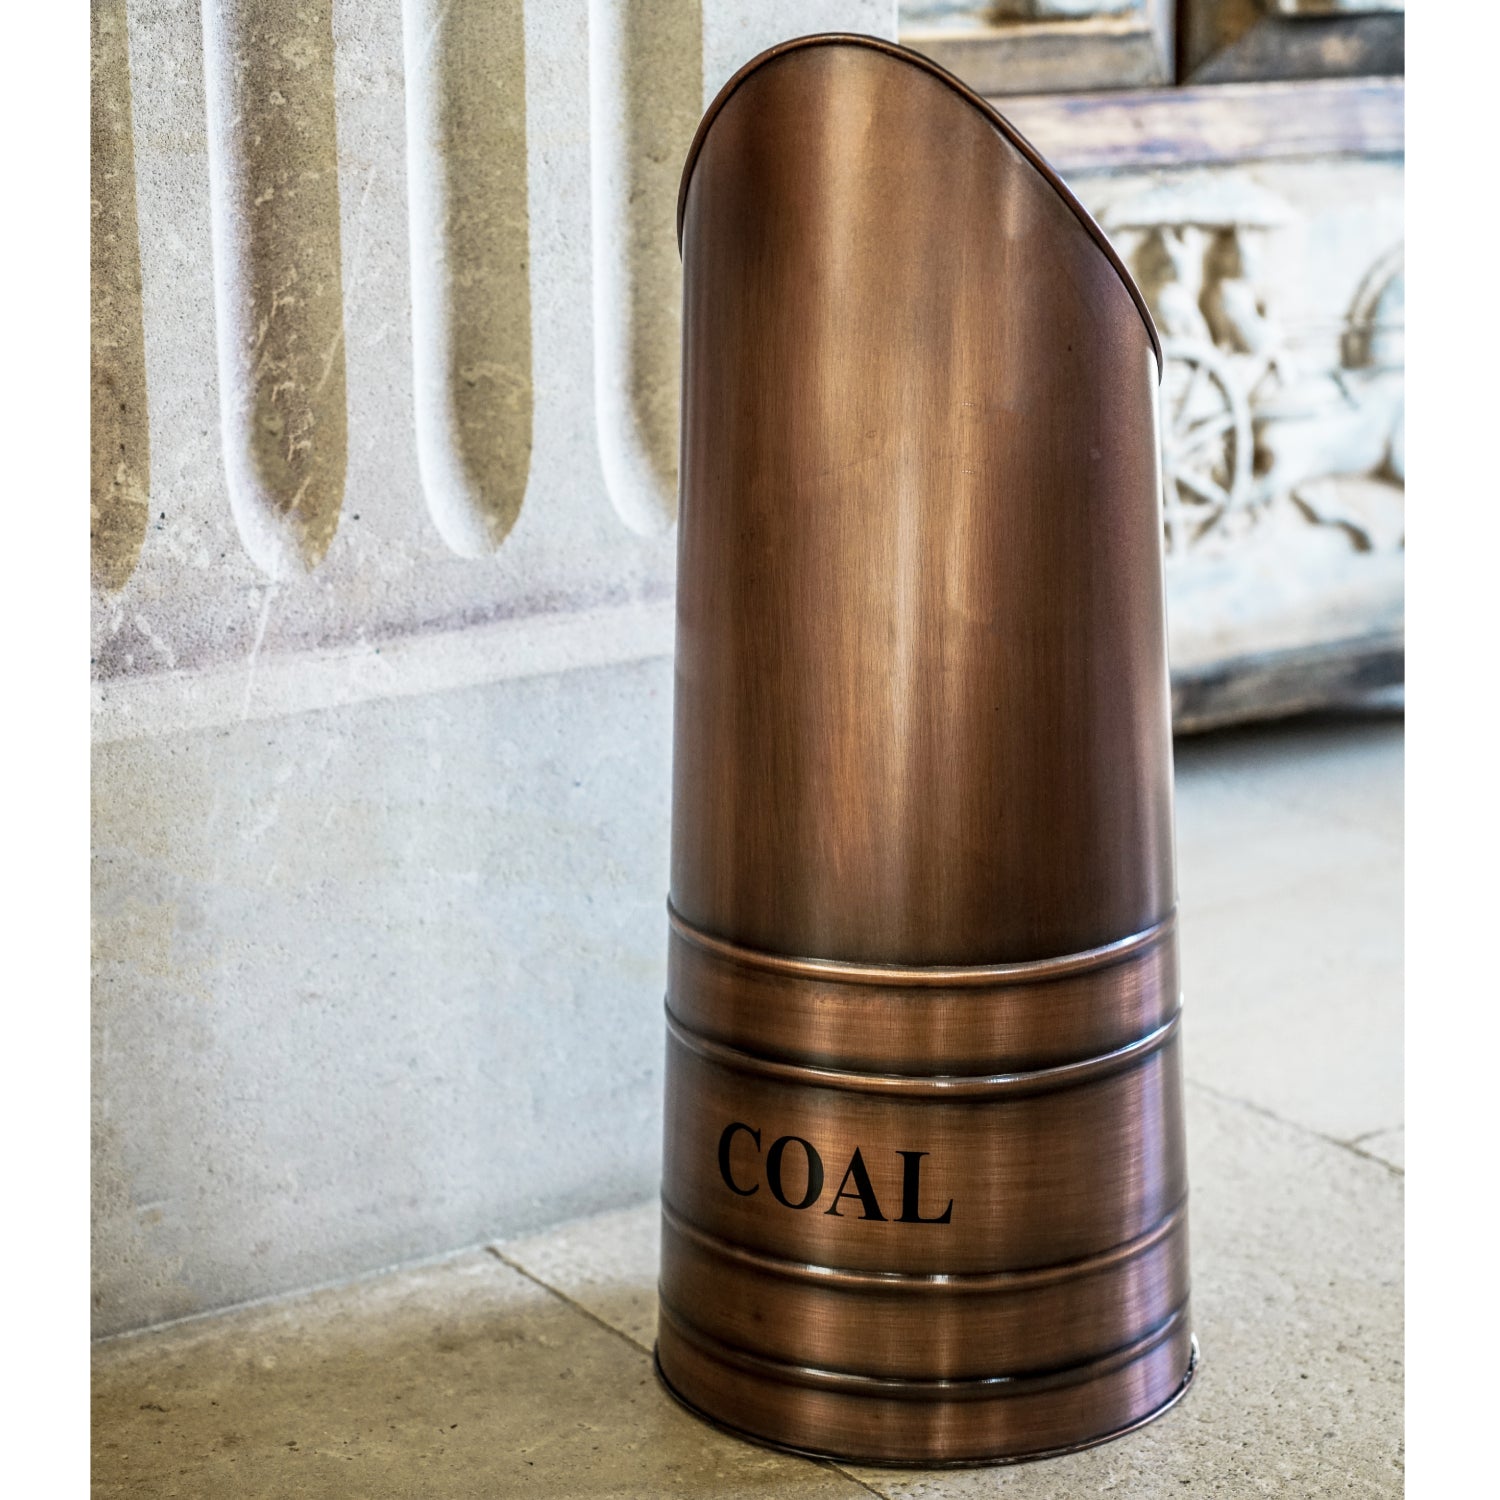 Coal Copper Hod by Ivyline